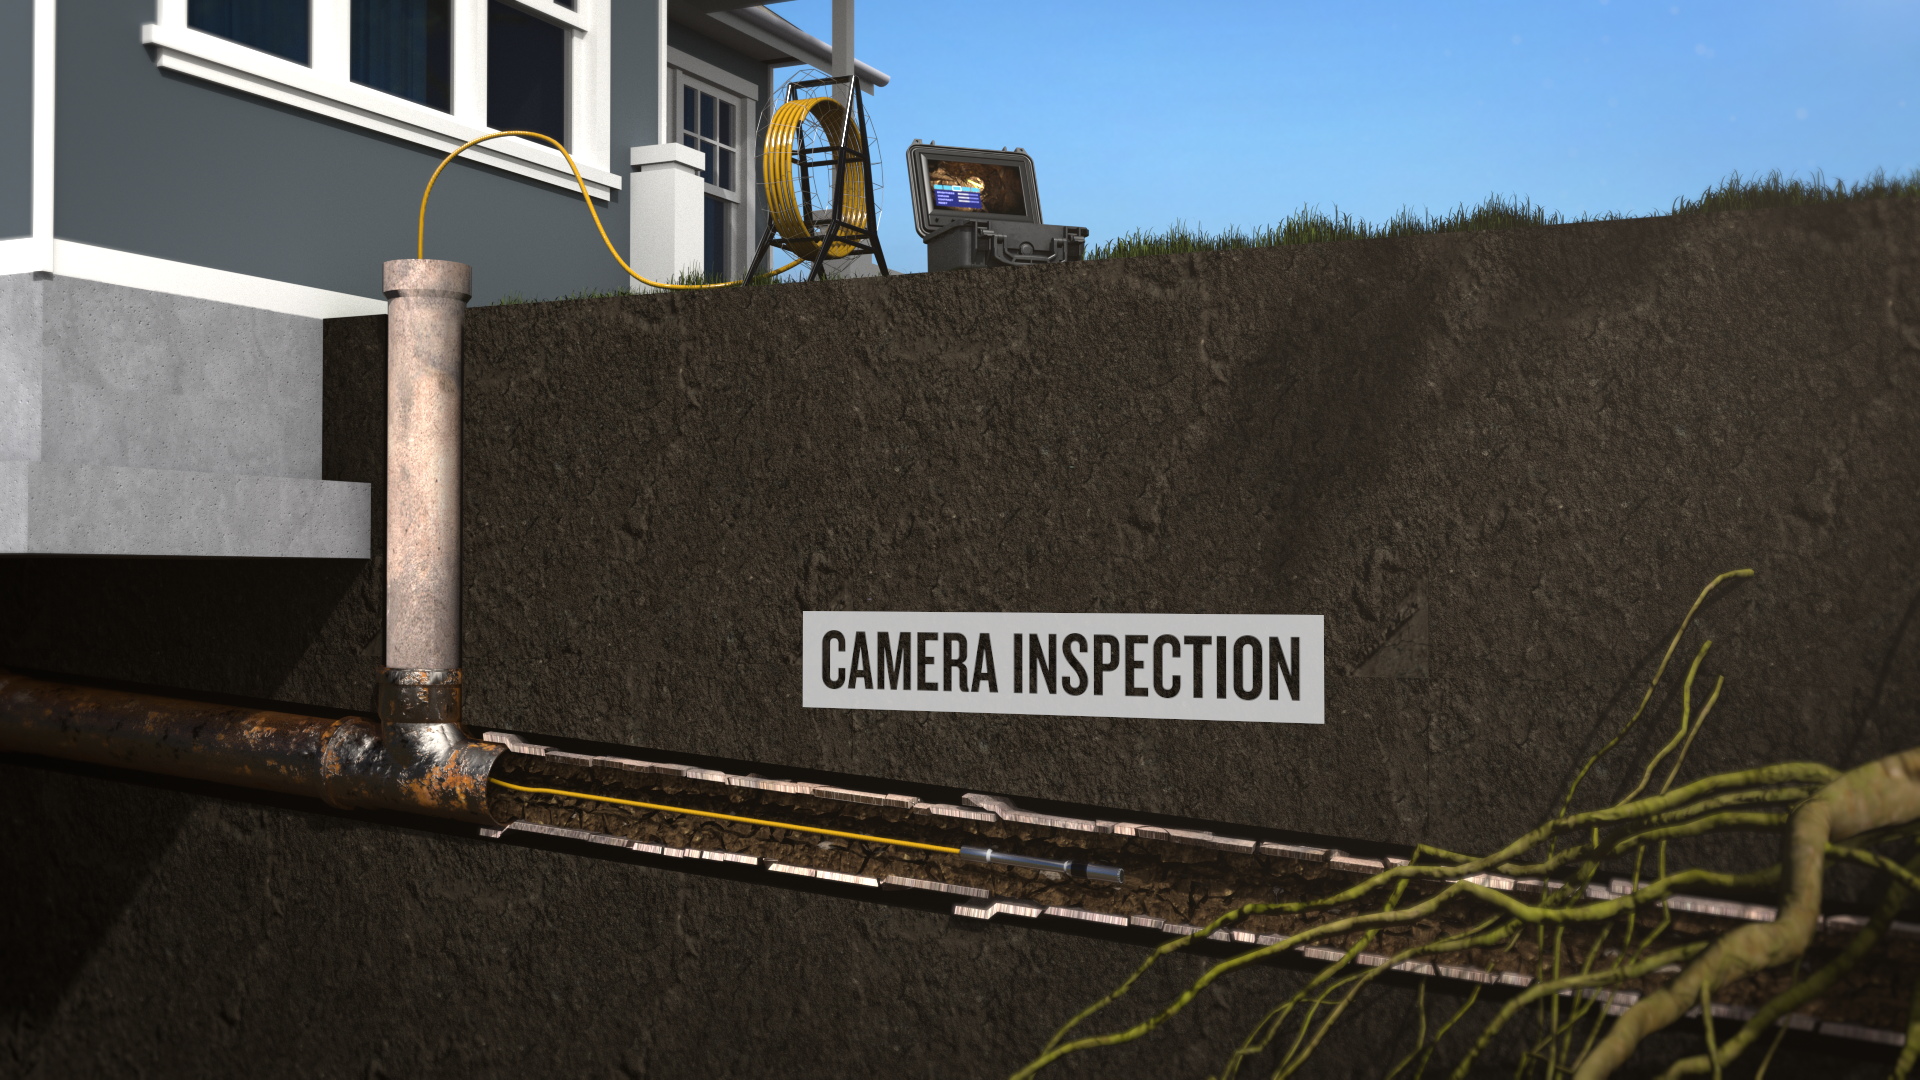 sewer camera inspection illustration